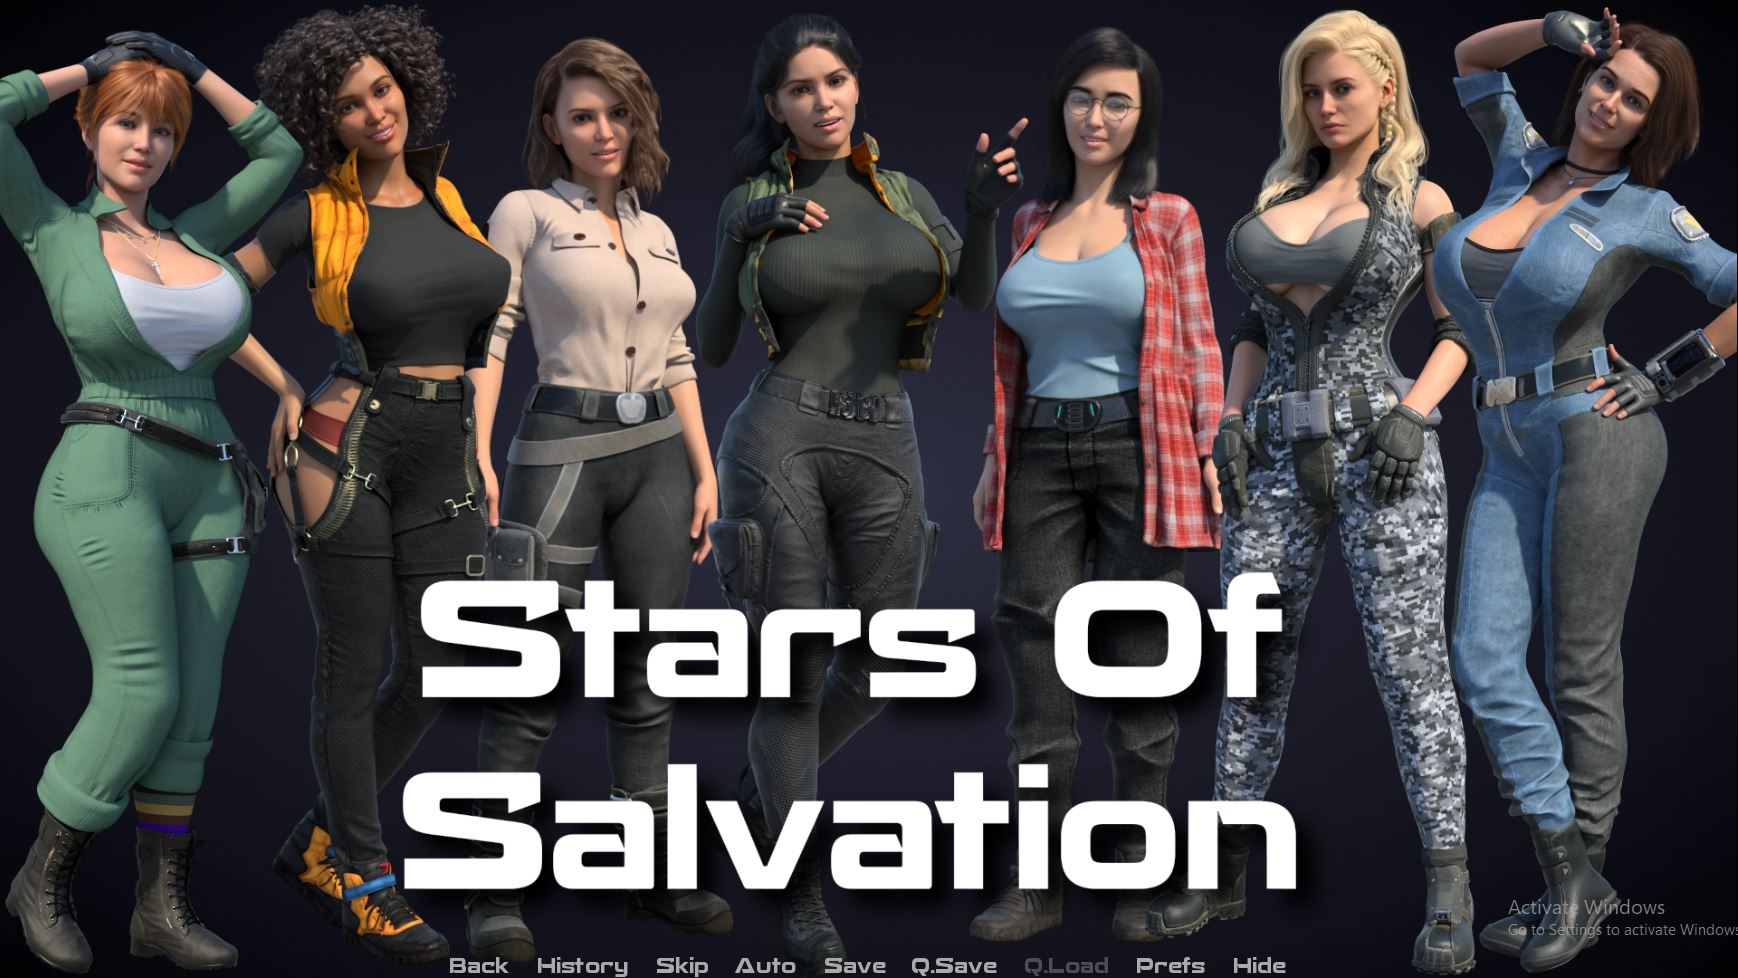 Stars of salvation porn game